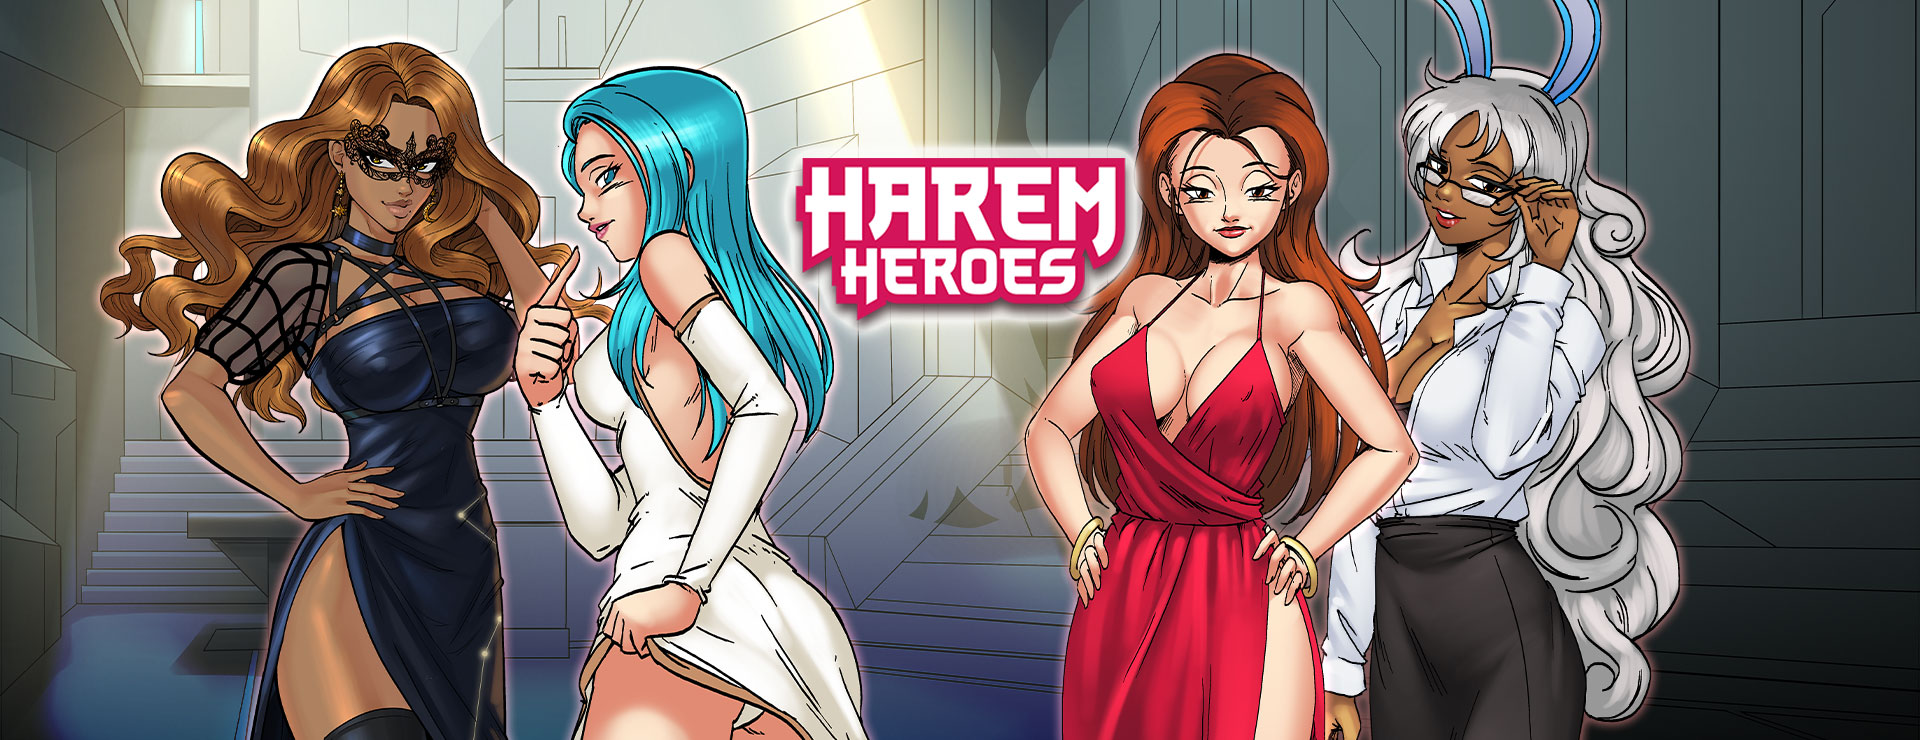 Harem Heroes Game - Action Aventure Jeu